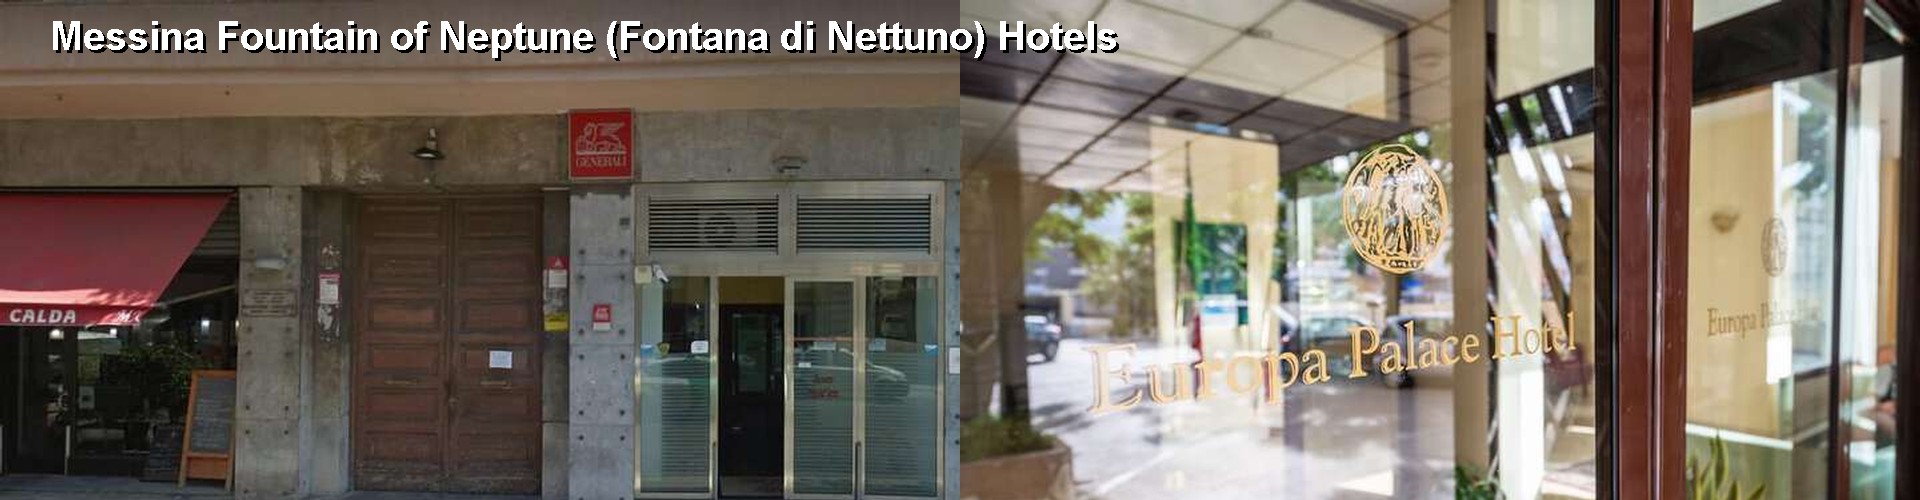 5 Best Hotels near Messina Fountain of Neptune (Fontana di Nettuno)